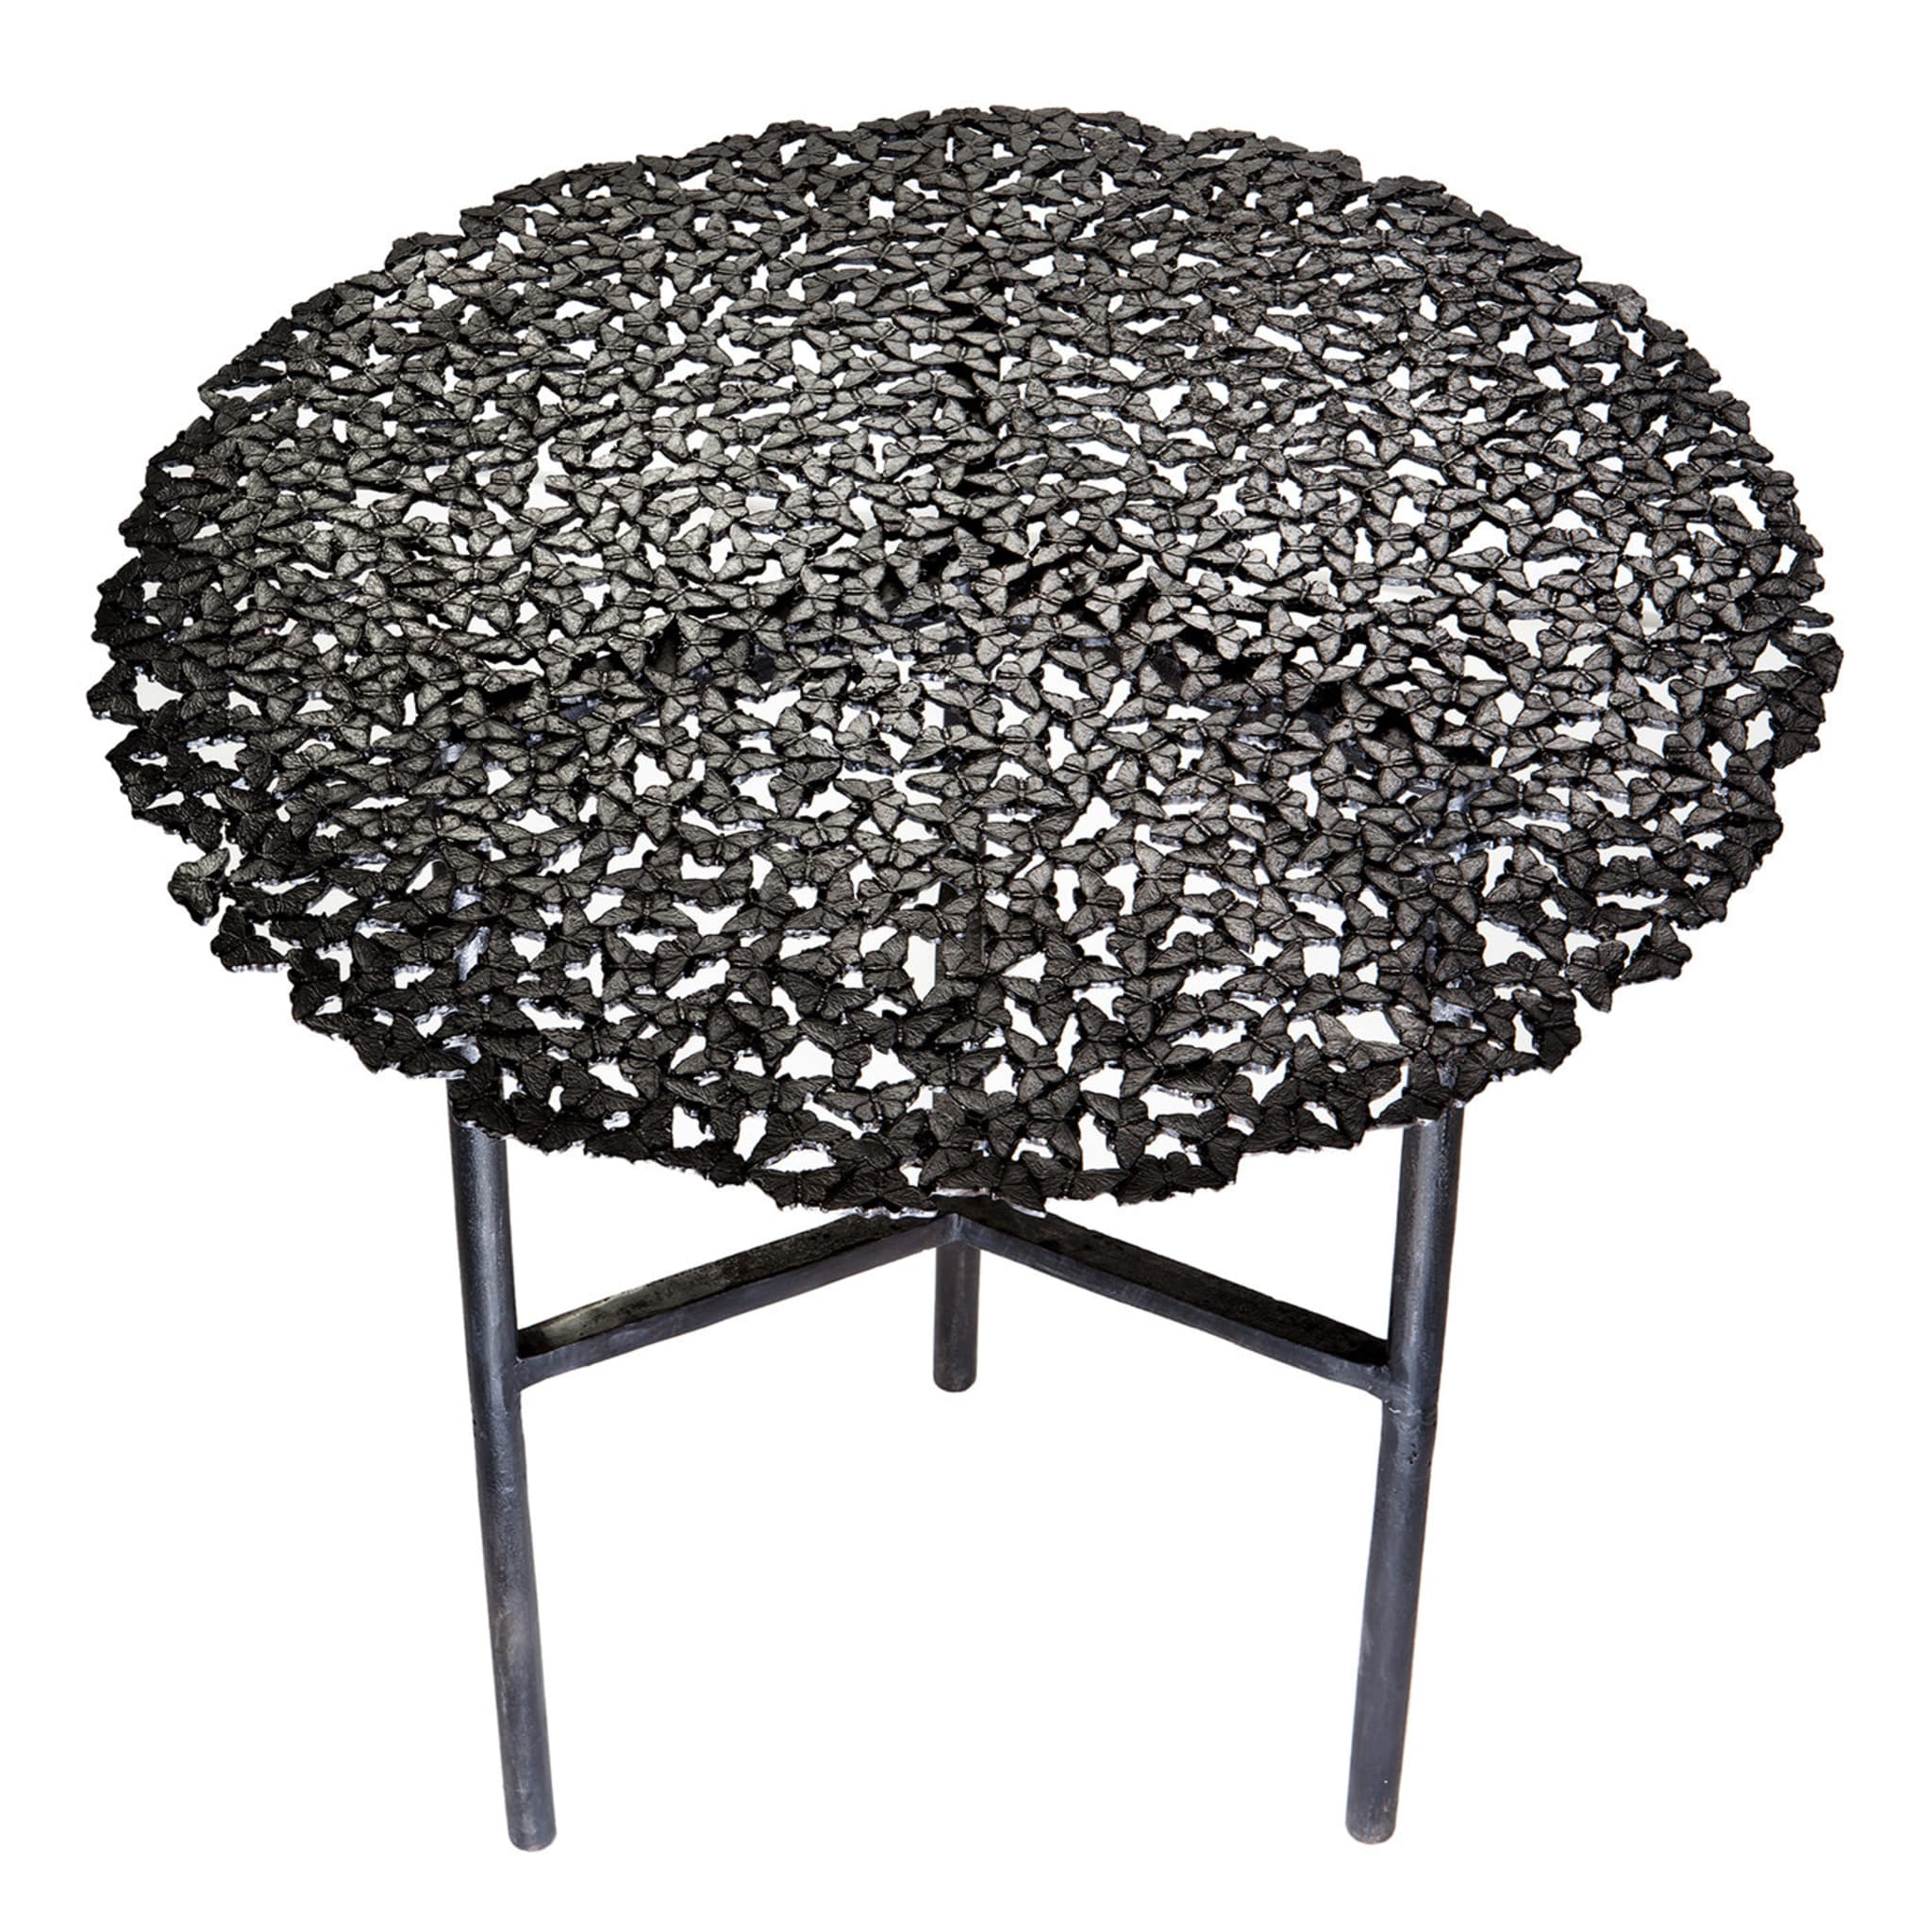 Jean Side Table in Black - Alternative view 1